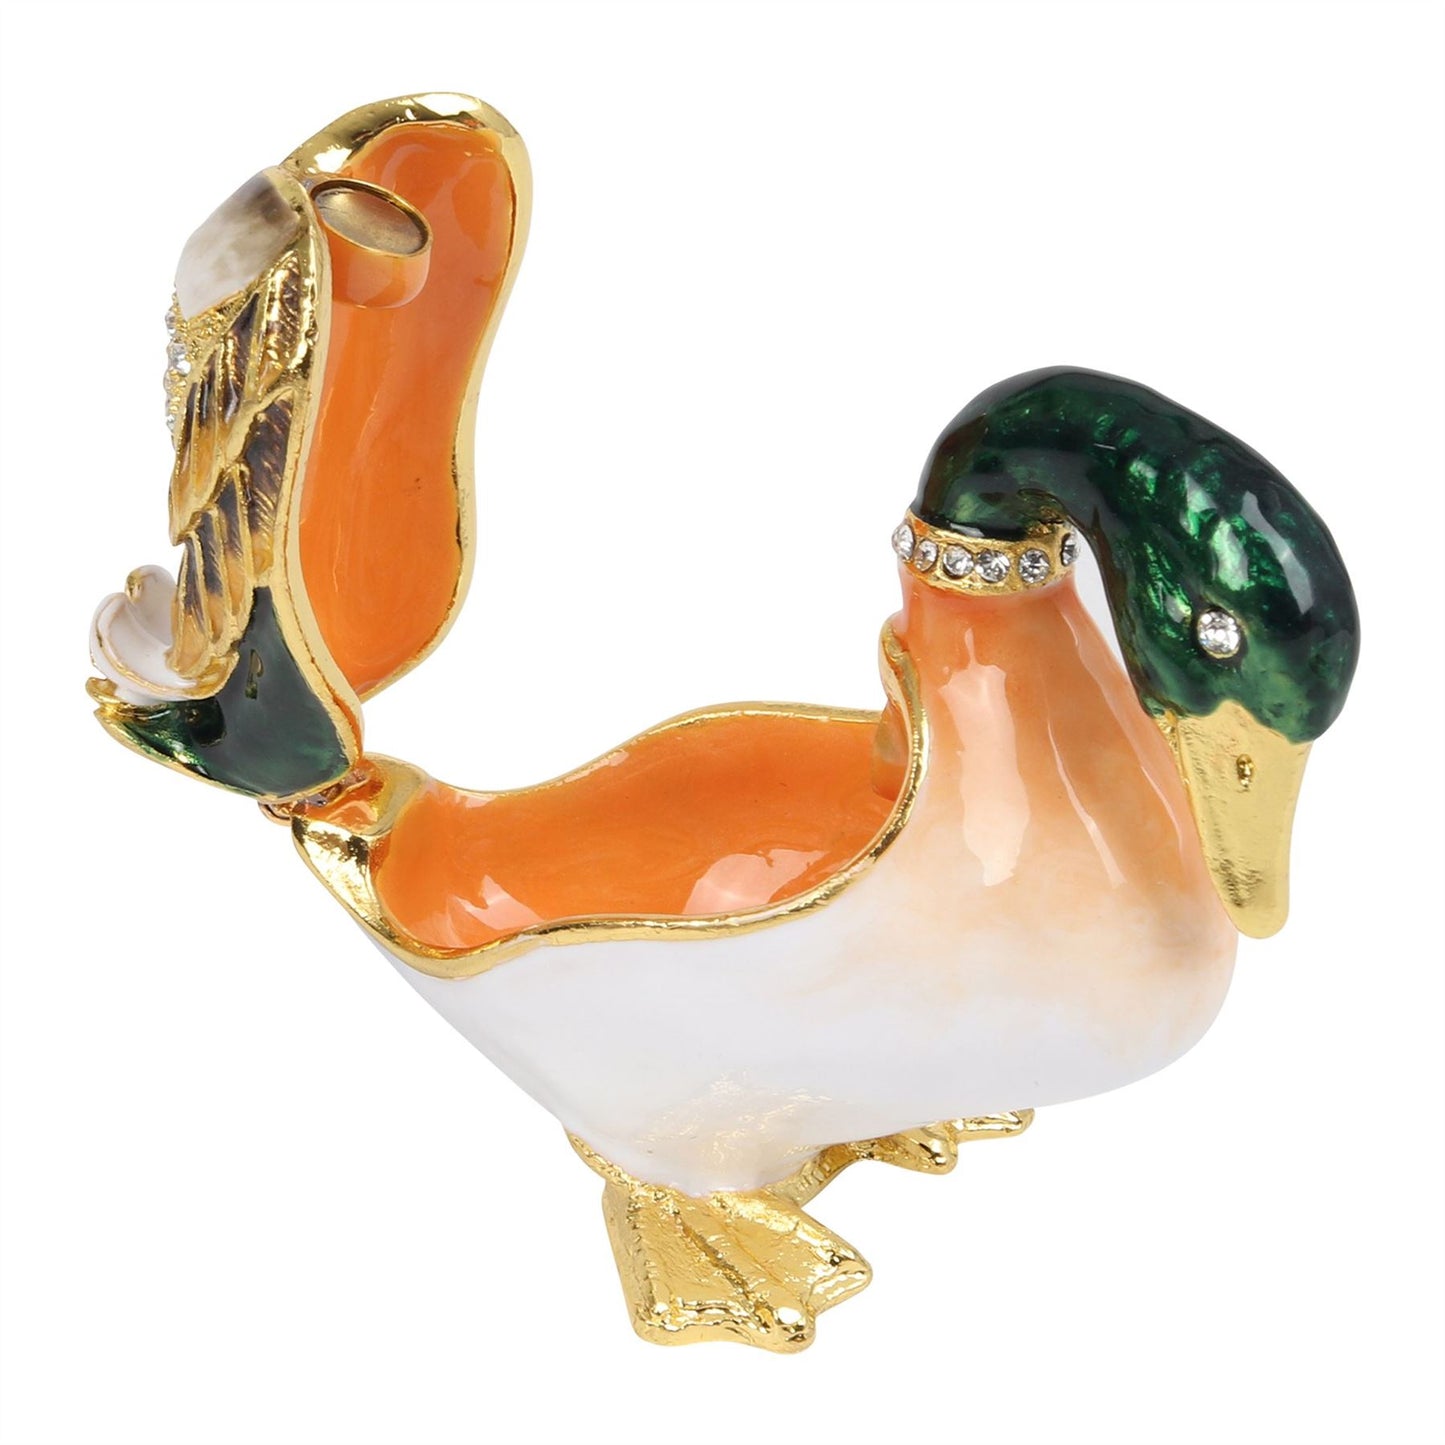 Treasured Trinkets - Duck